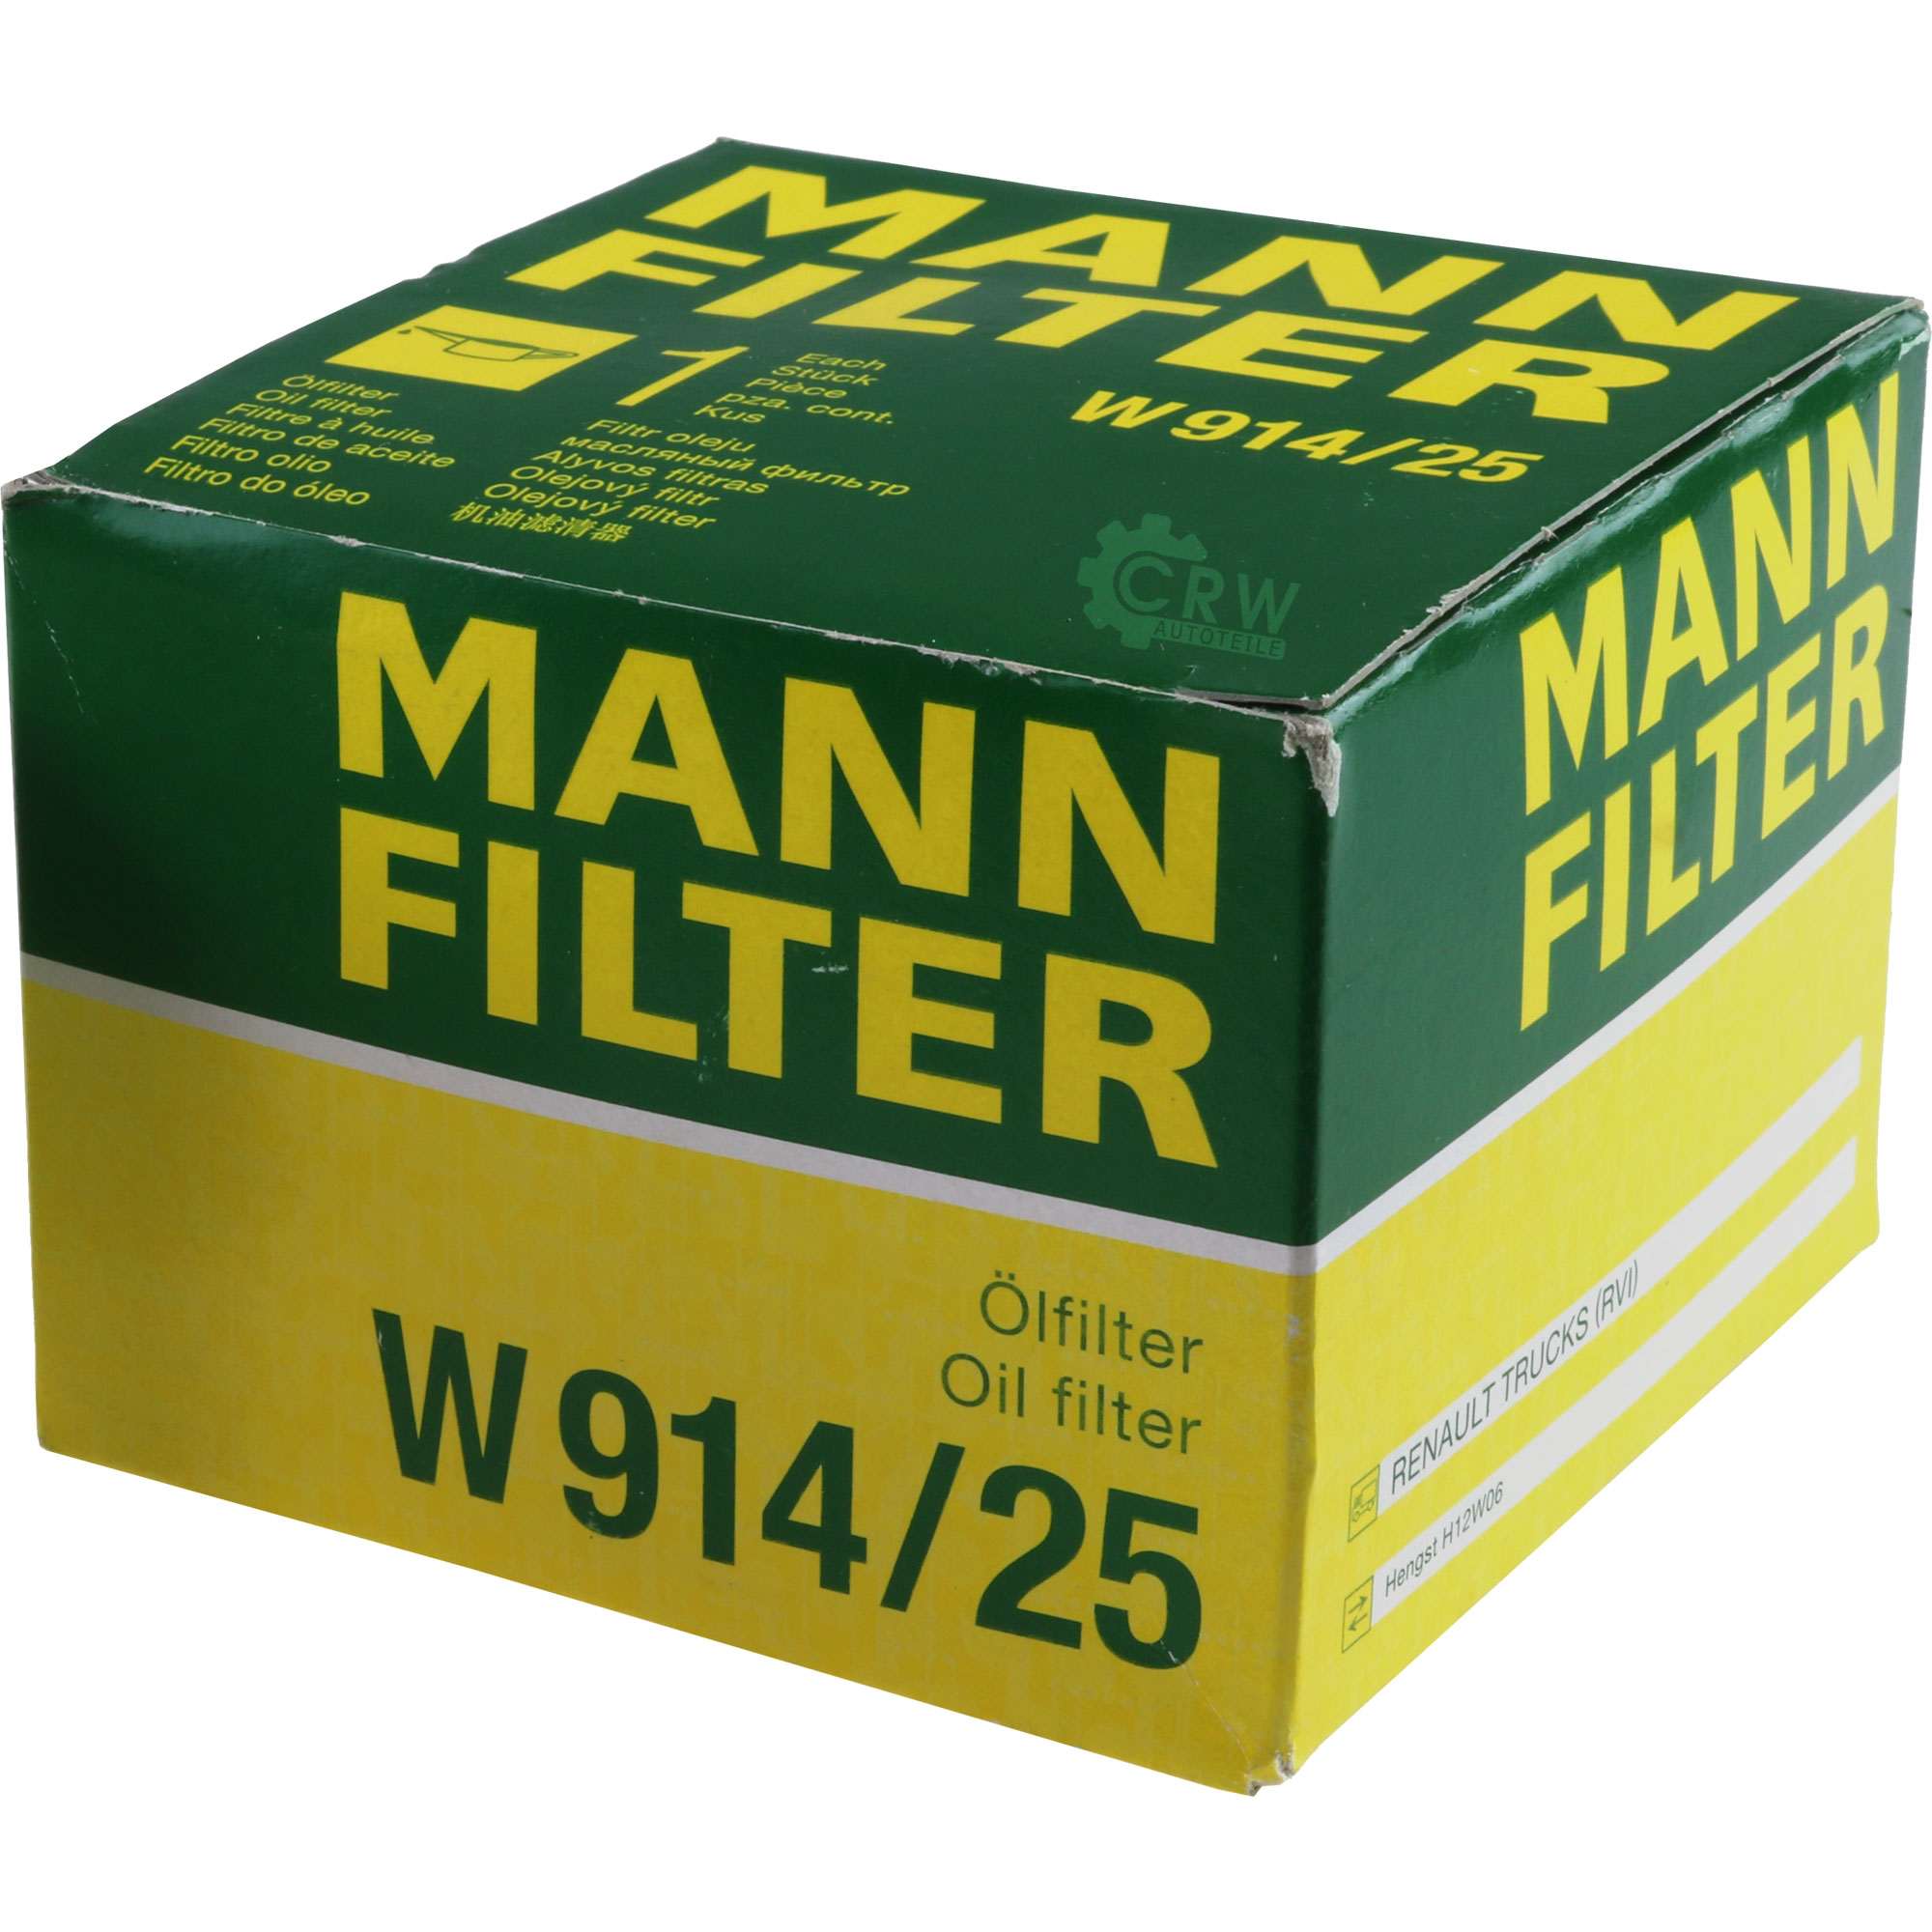 MANN-FILTER Hydraulikfilter für Automatikgetriebe W 914/25